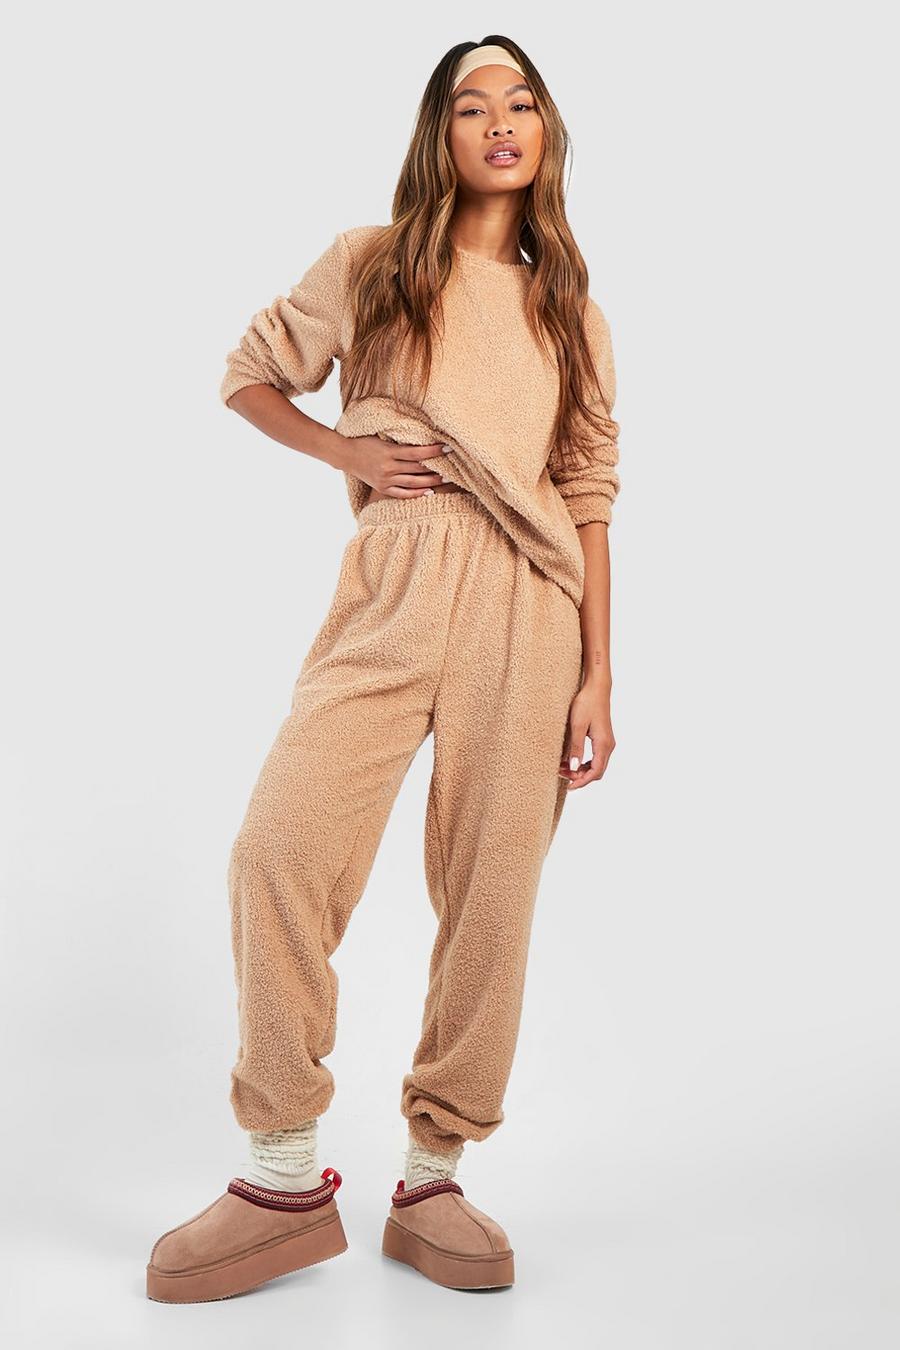 Camel Hers Matching Teddy Long Sleeve Loungewear Track Pants Set